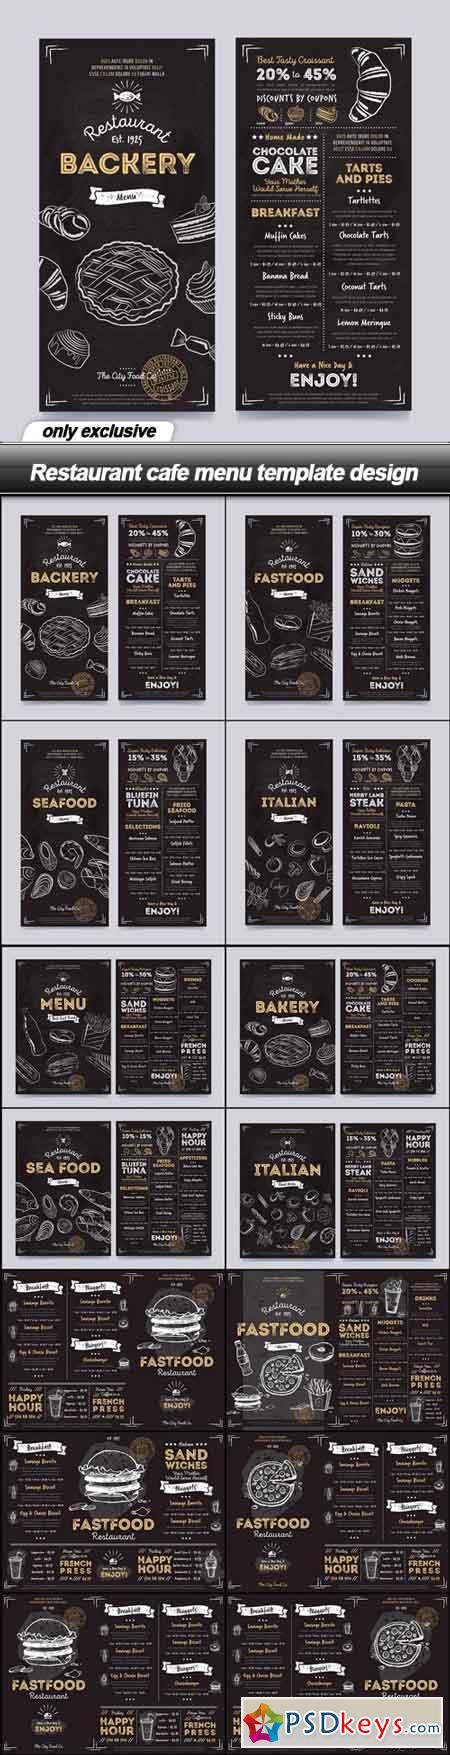 Restaurant cafe menu template design - 14 EPS